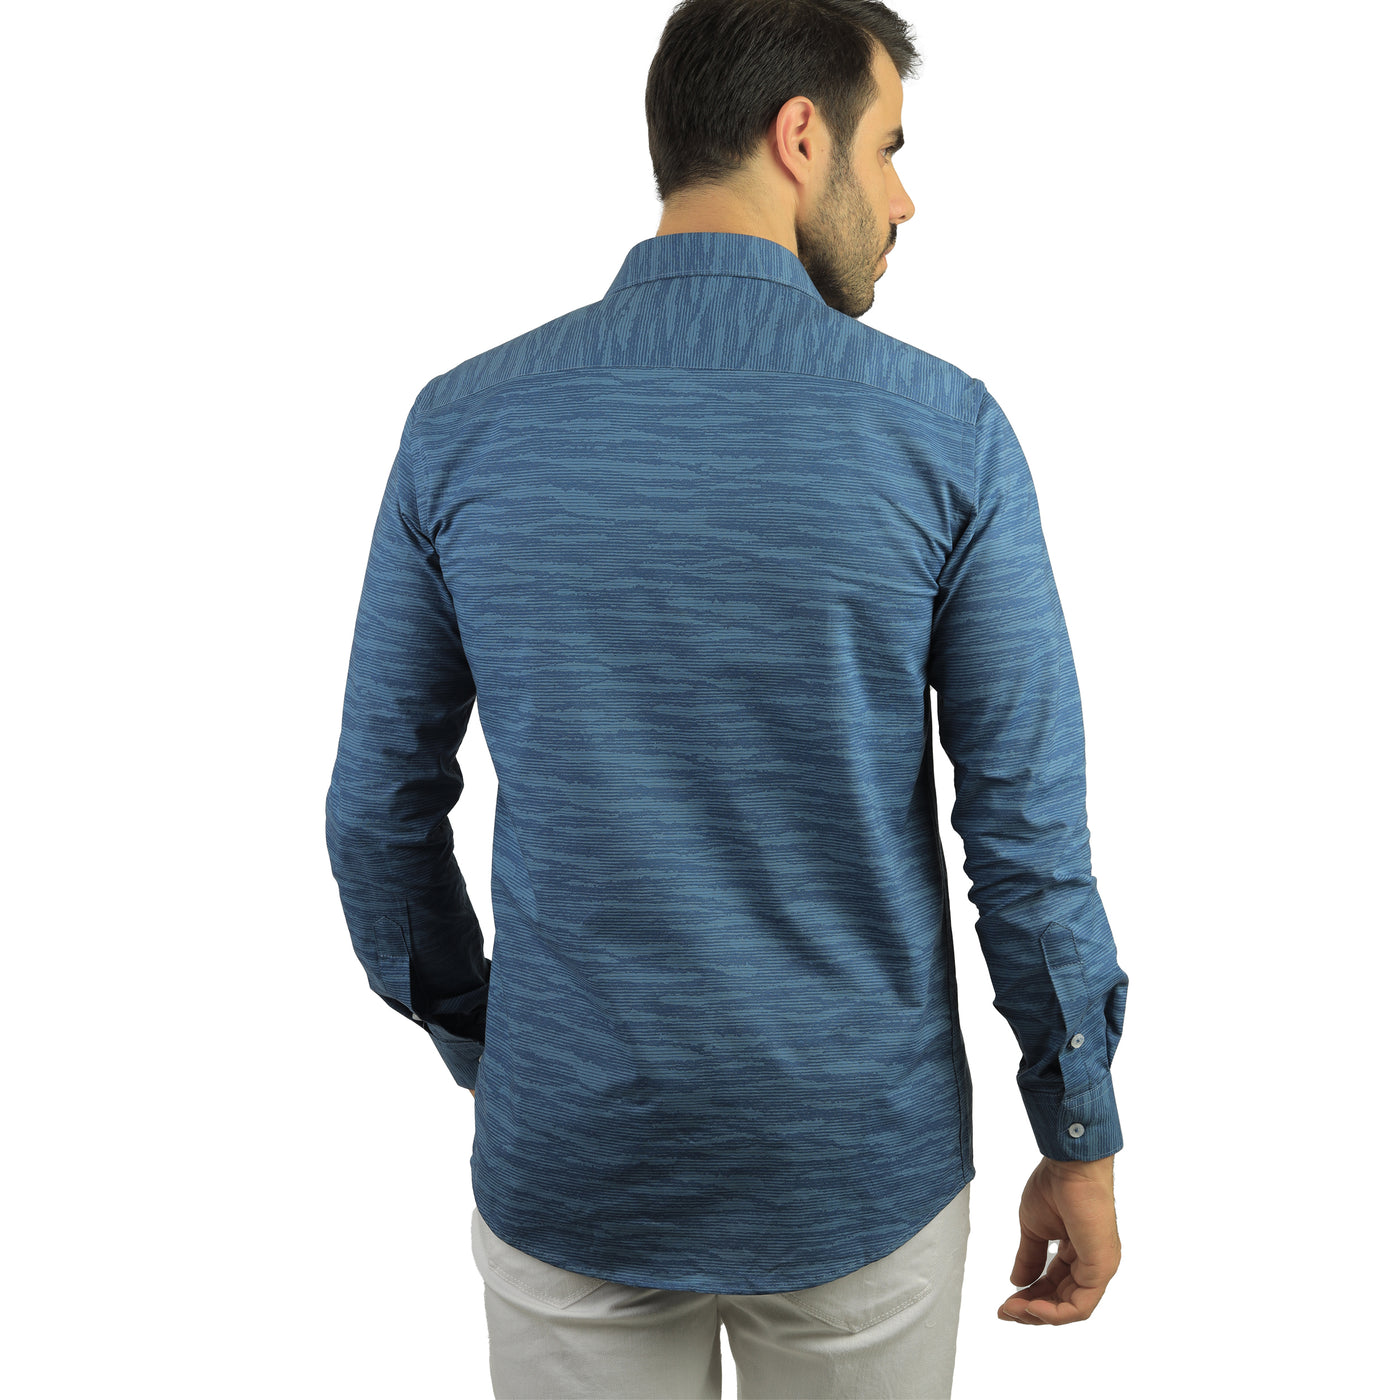 Teal-Blue Casual Shirt